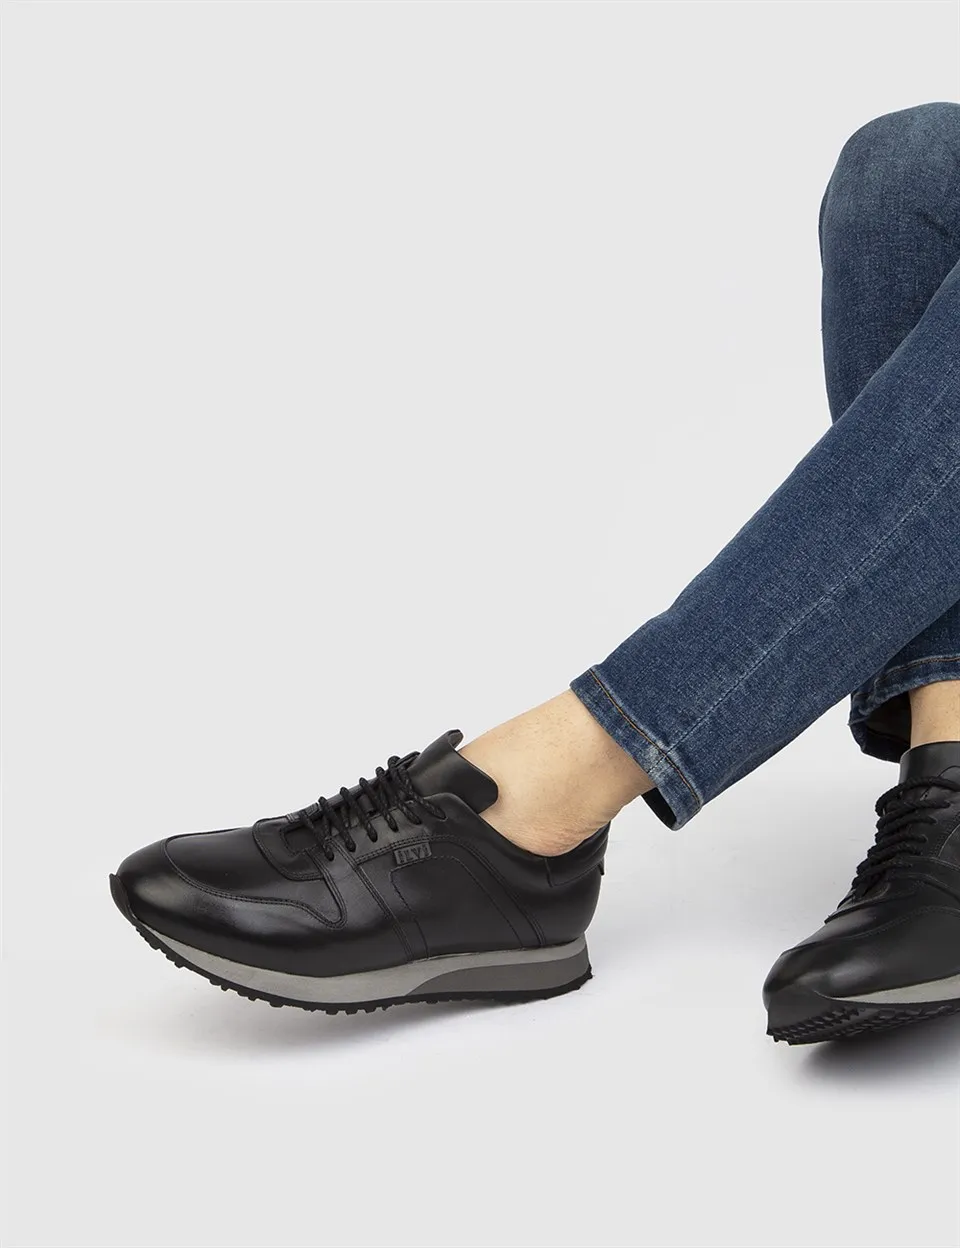 

ILVi-Genuine Leather Handmade Emrick Black Leather Men's Sneaker Men Shoes 2022 Spring/Summer